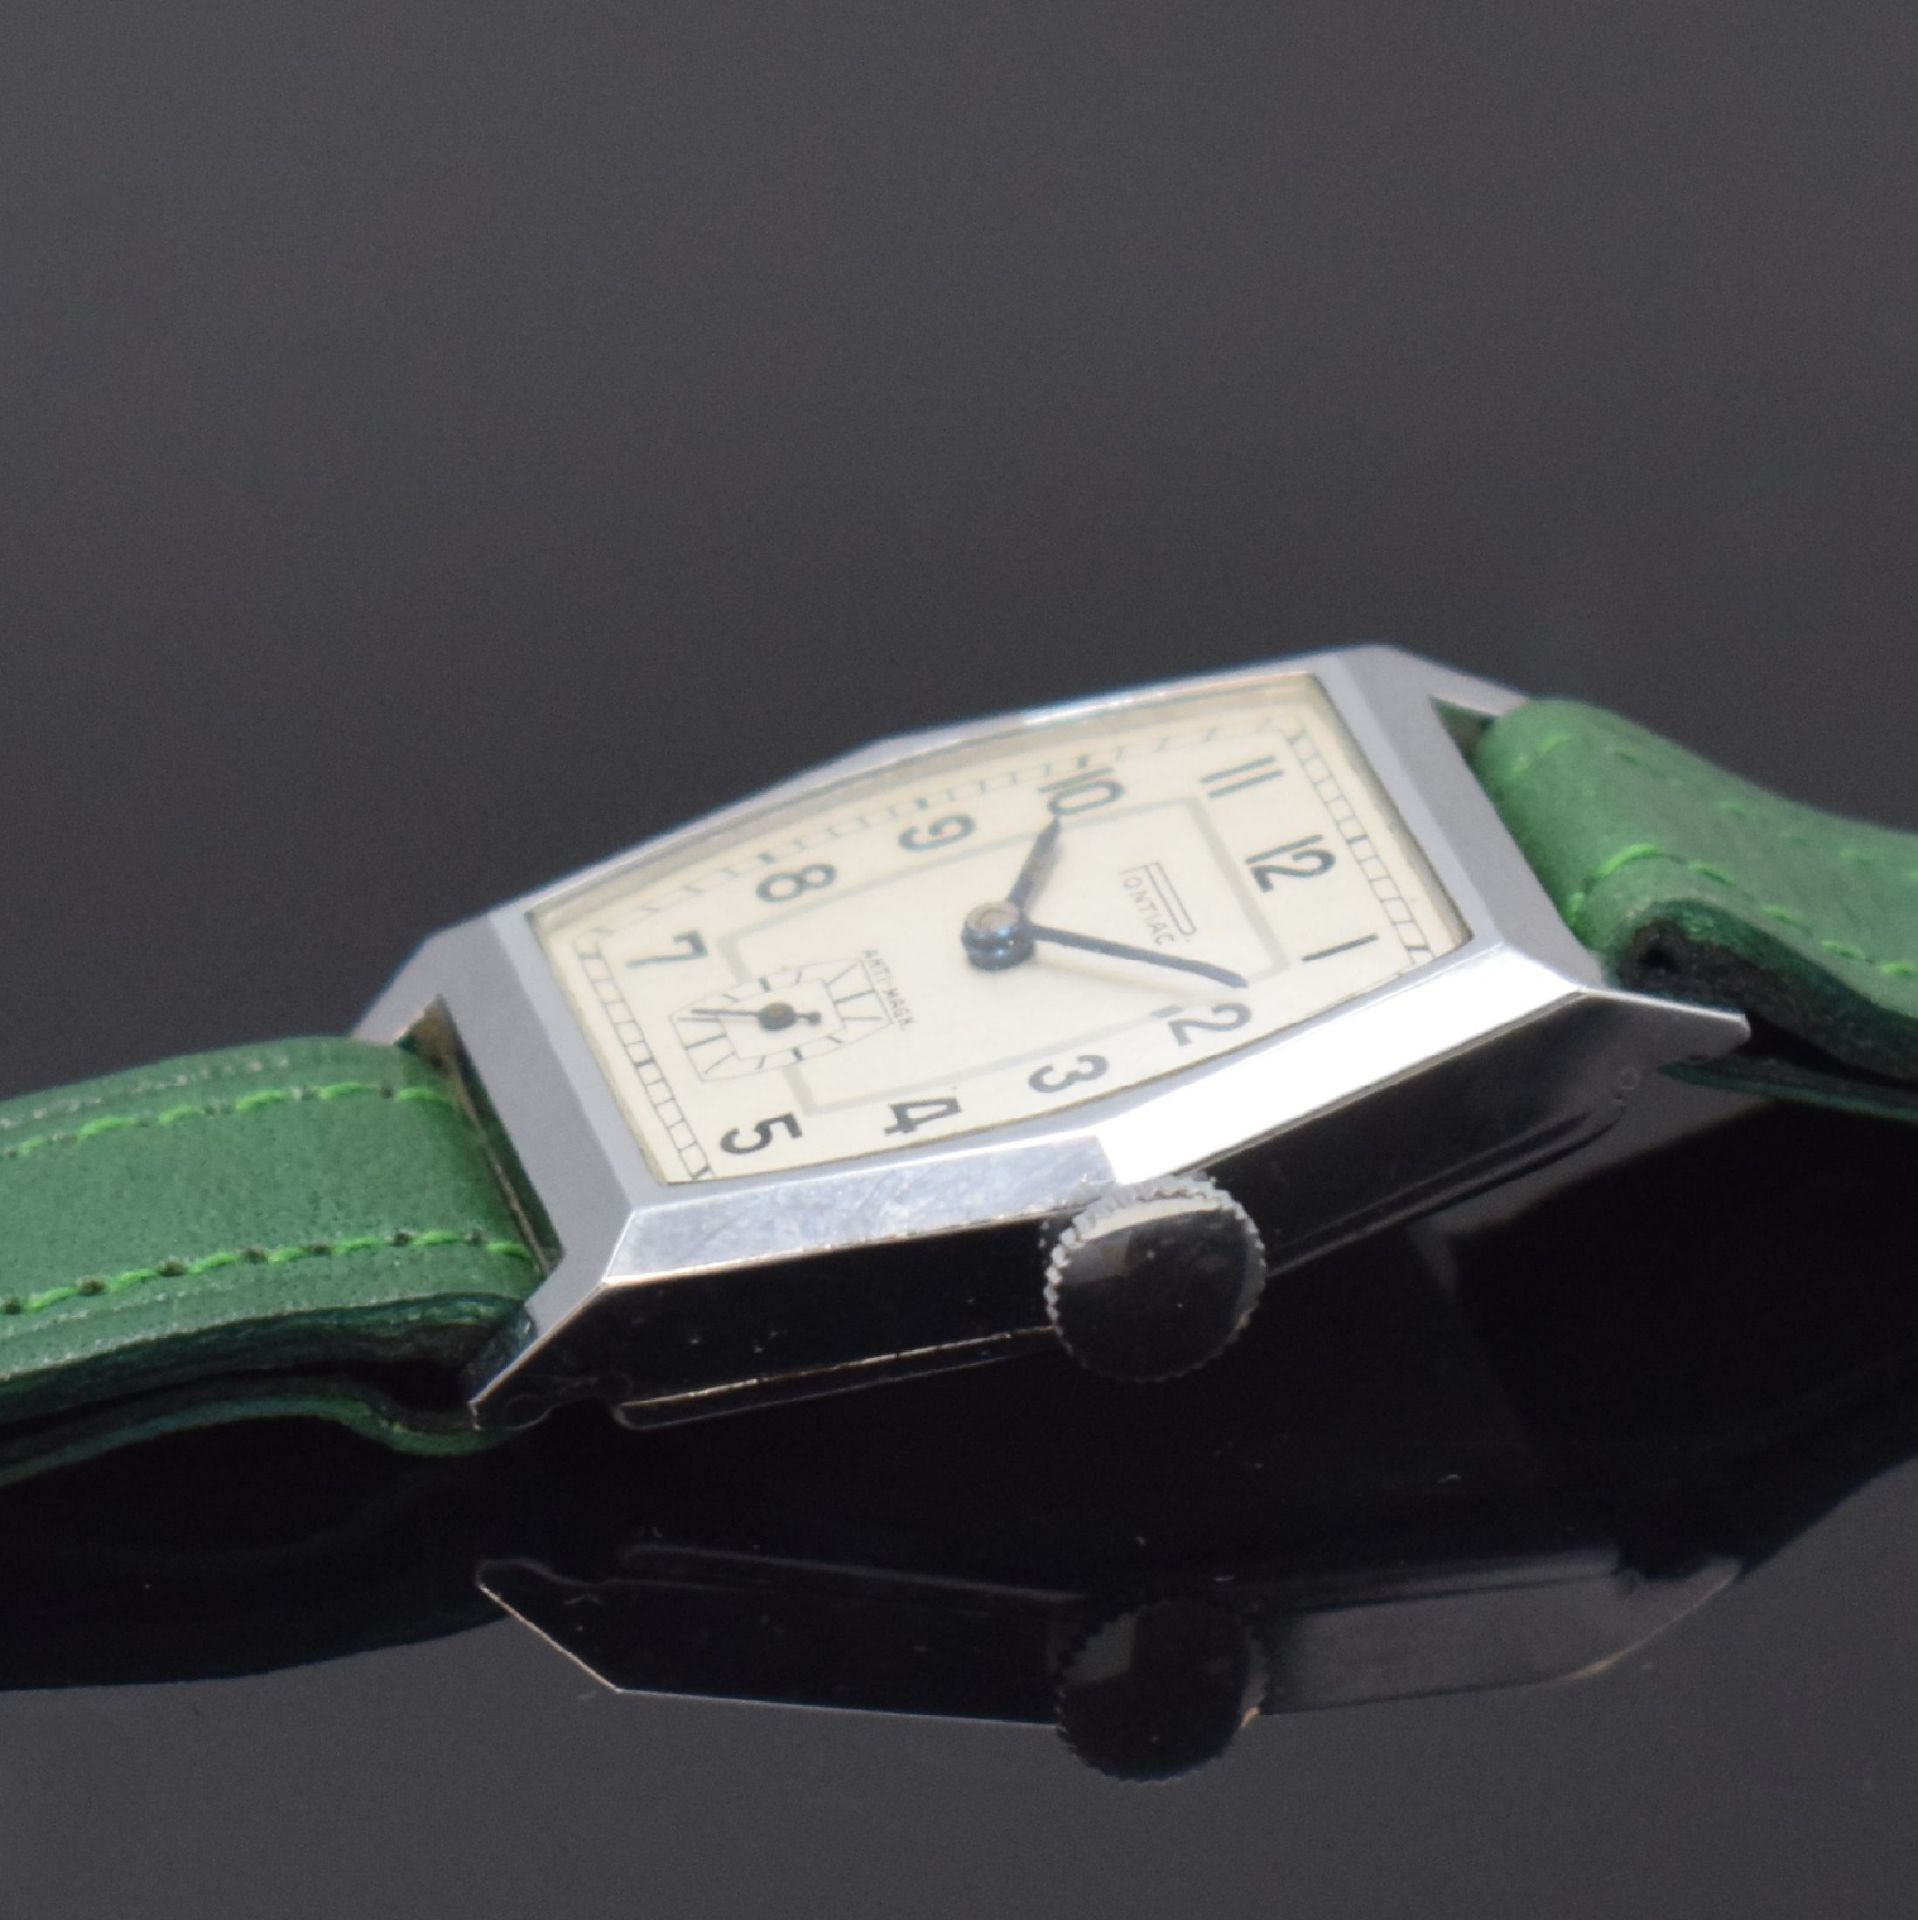 PONTIAC 2 verchromte Armbanduhren, Schweiz um 1940, - Image 10 of 13